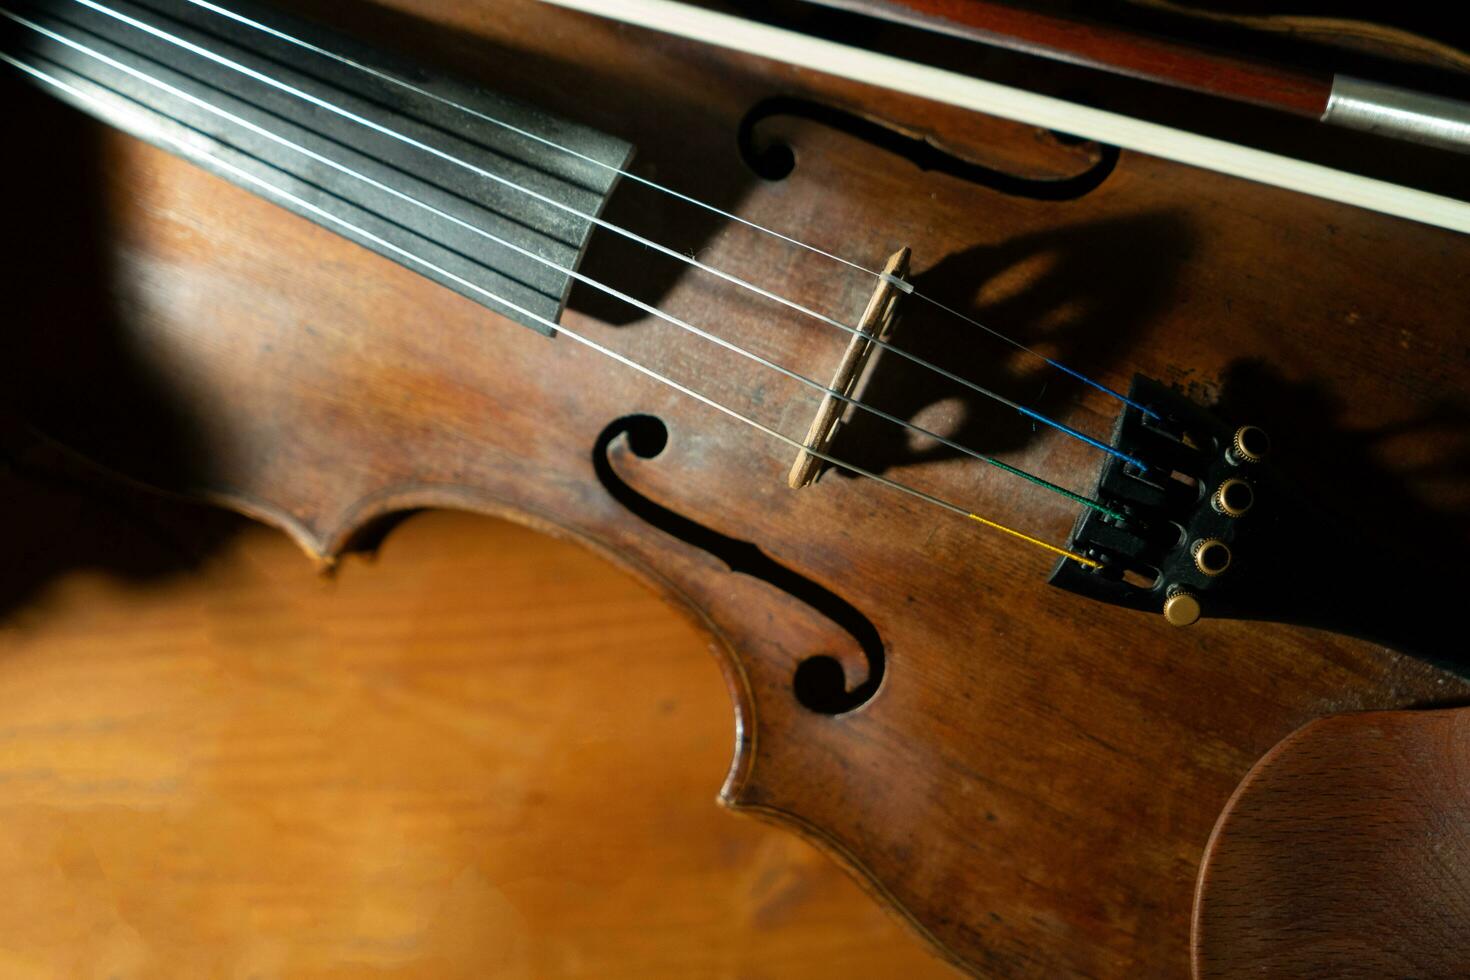 Close view of a violin strings and bridge photo